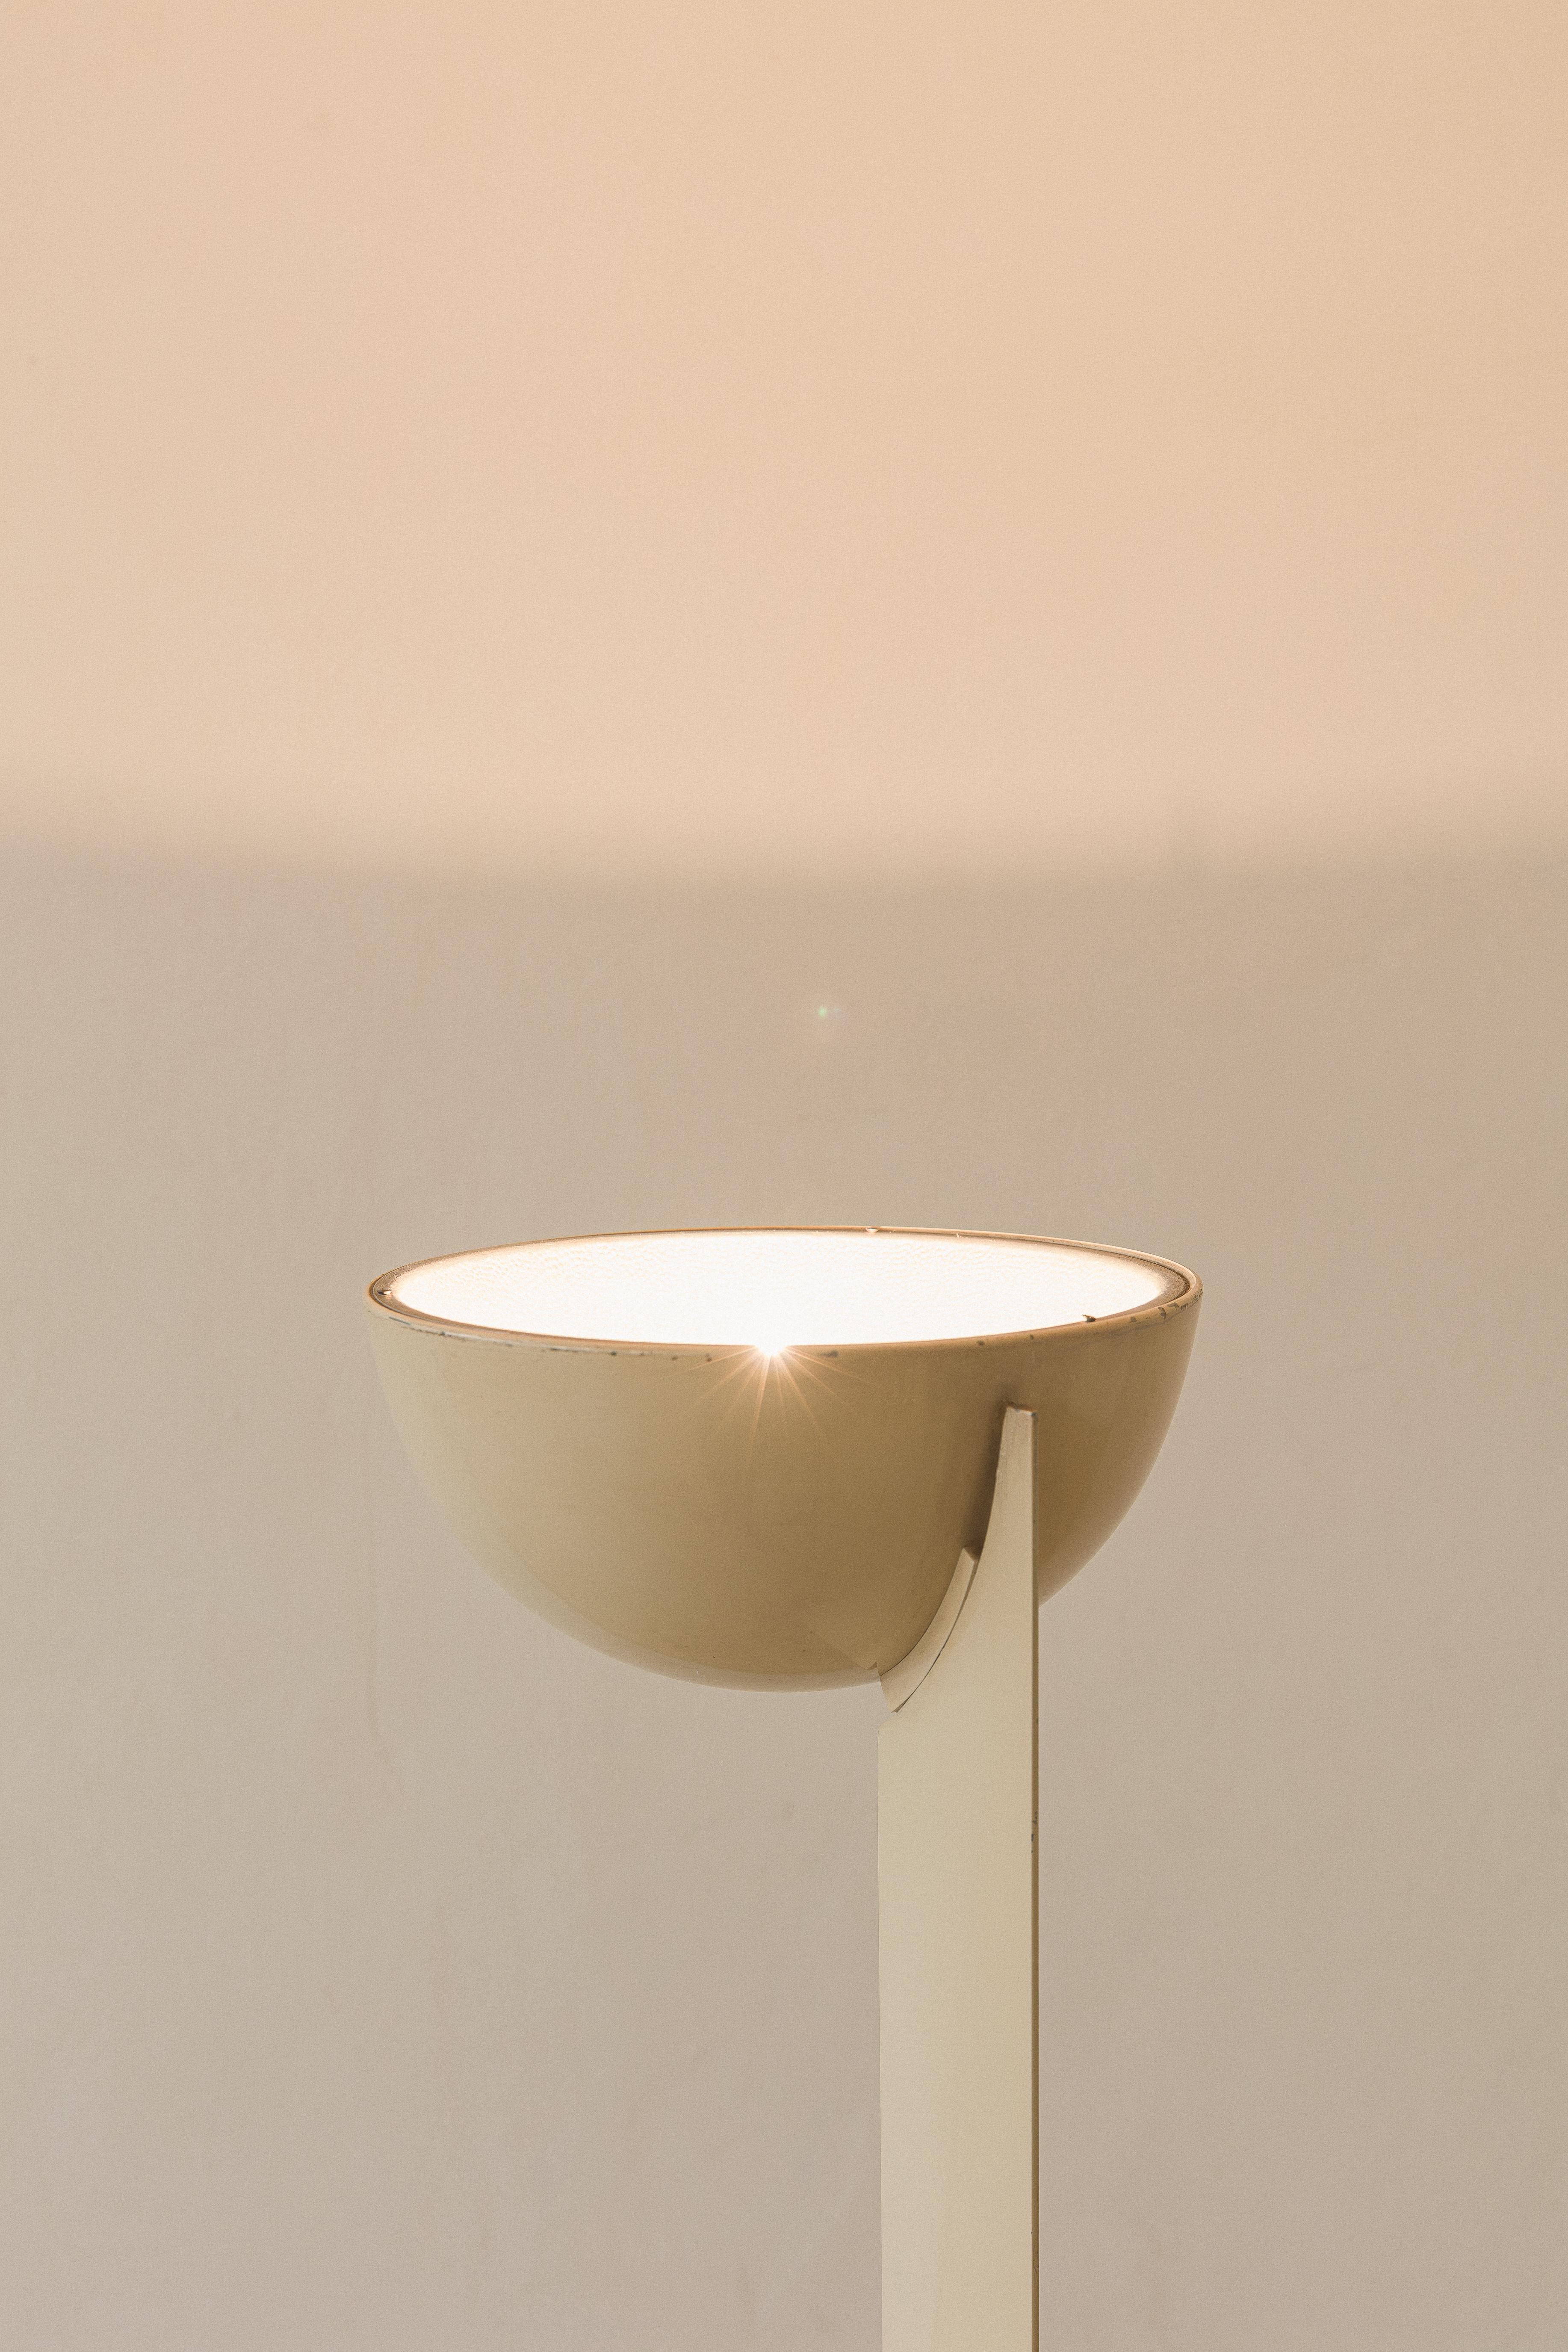 Dominici Floor Lamp, MidCentury Modern Brazilian Design by Enrico Furio, c.1950s For Sale 1